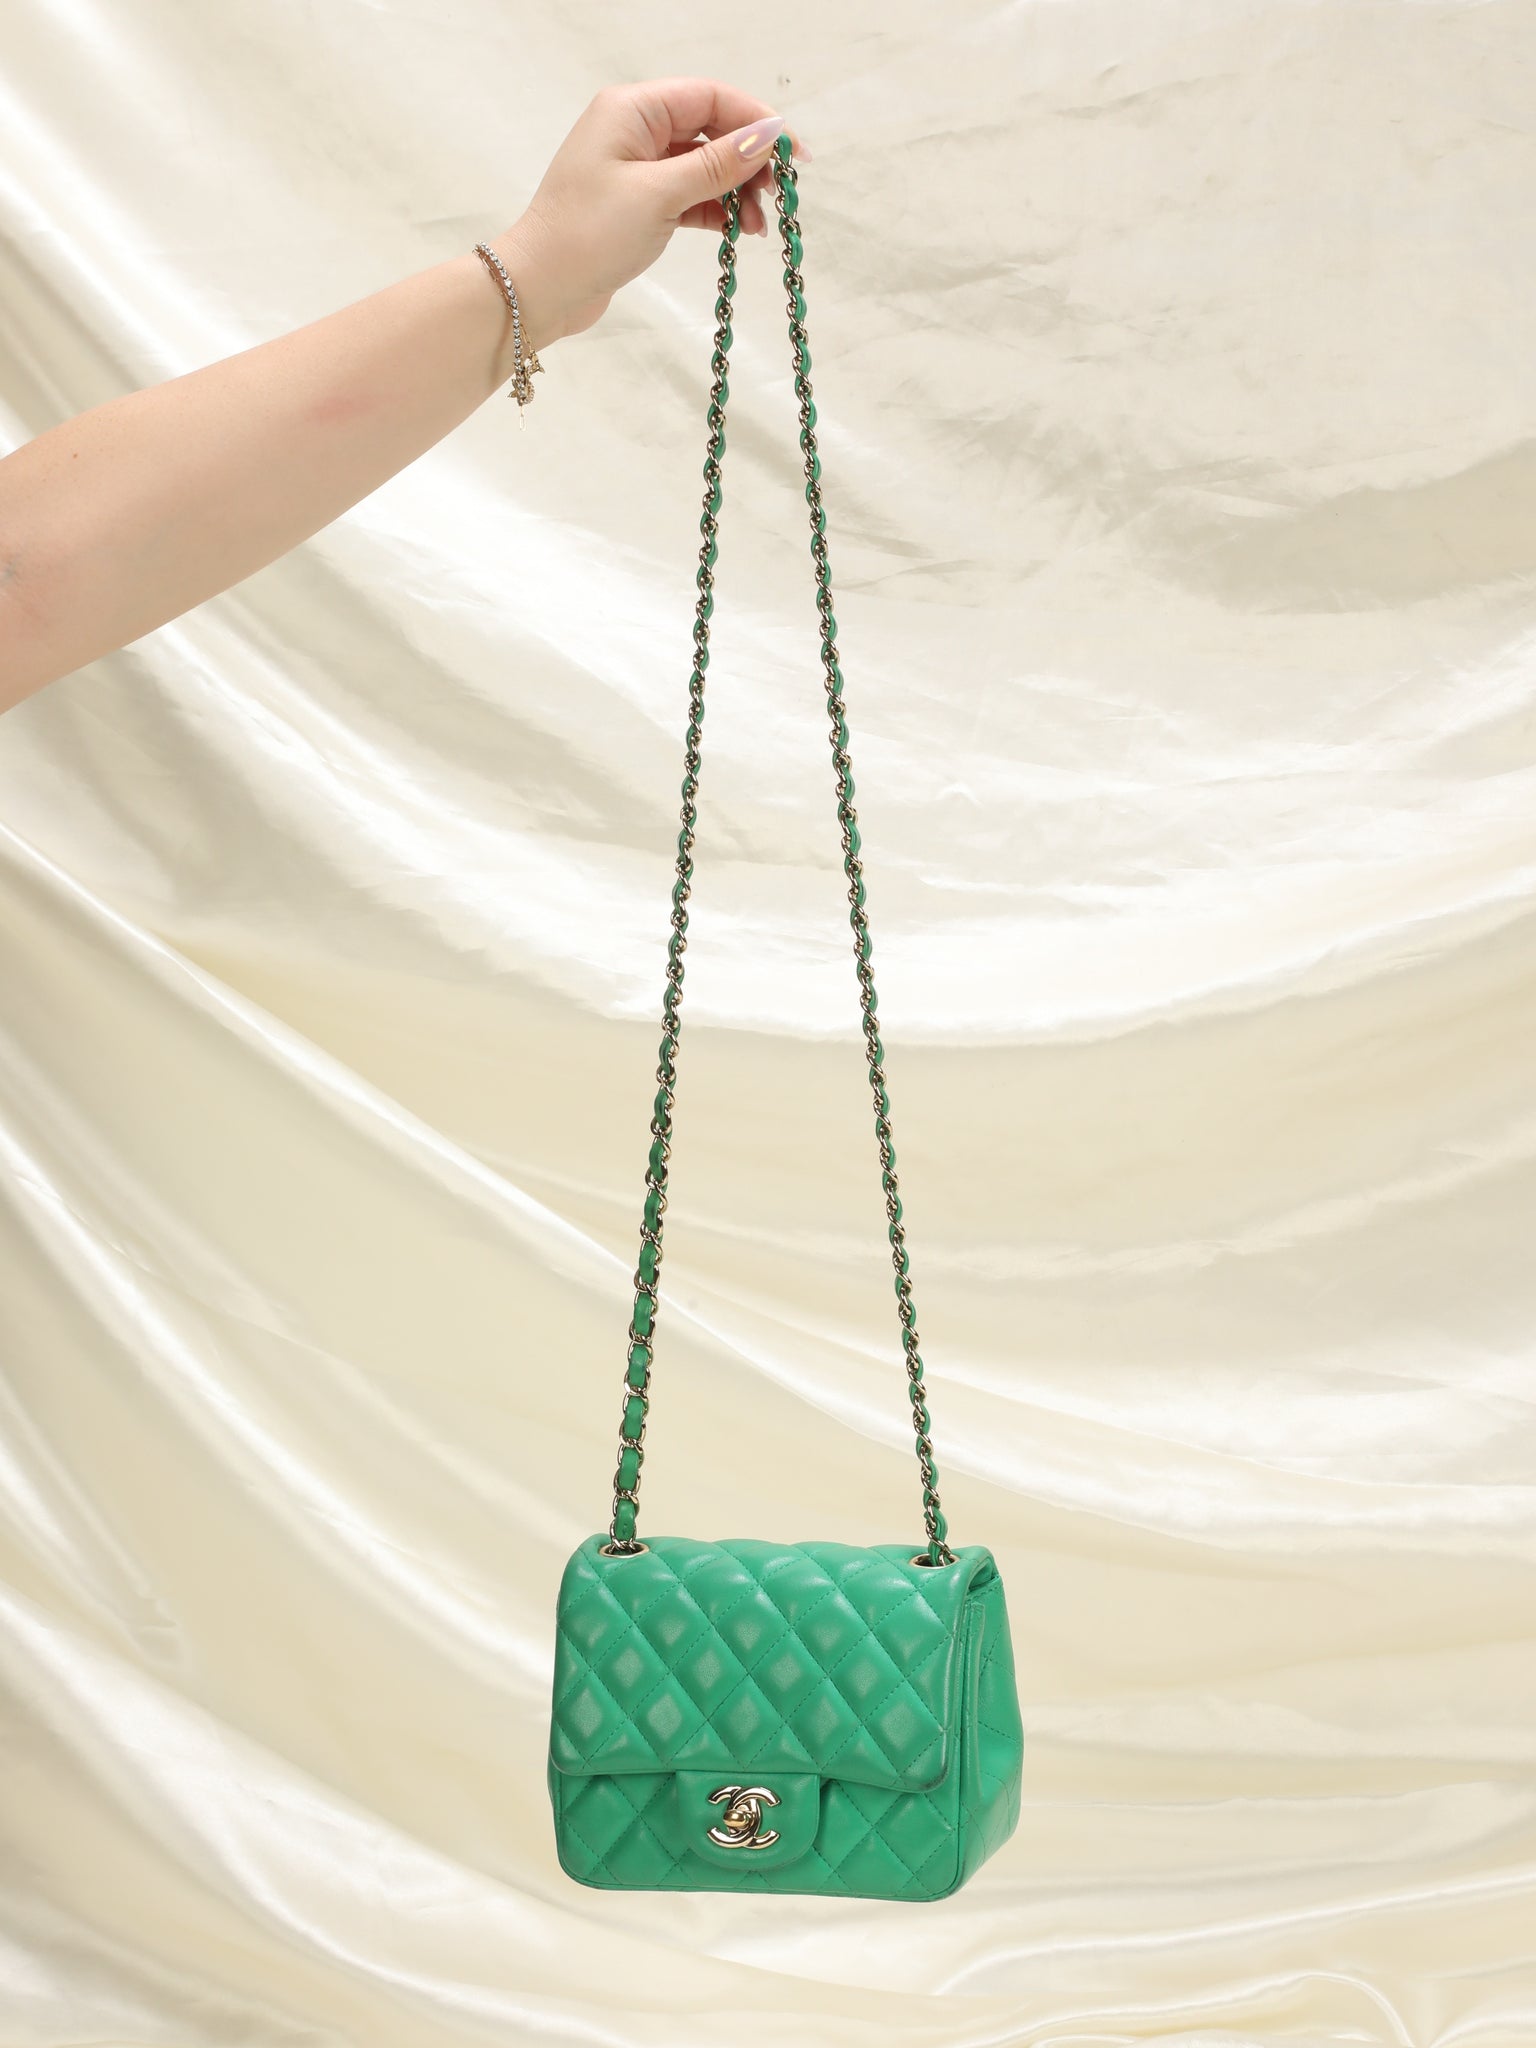 Rare Chanel Lambskin Square Green Mini Flap Bag